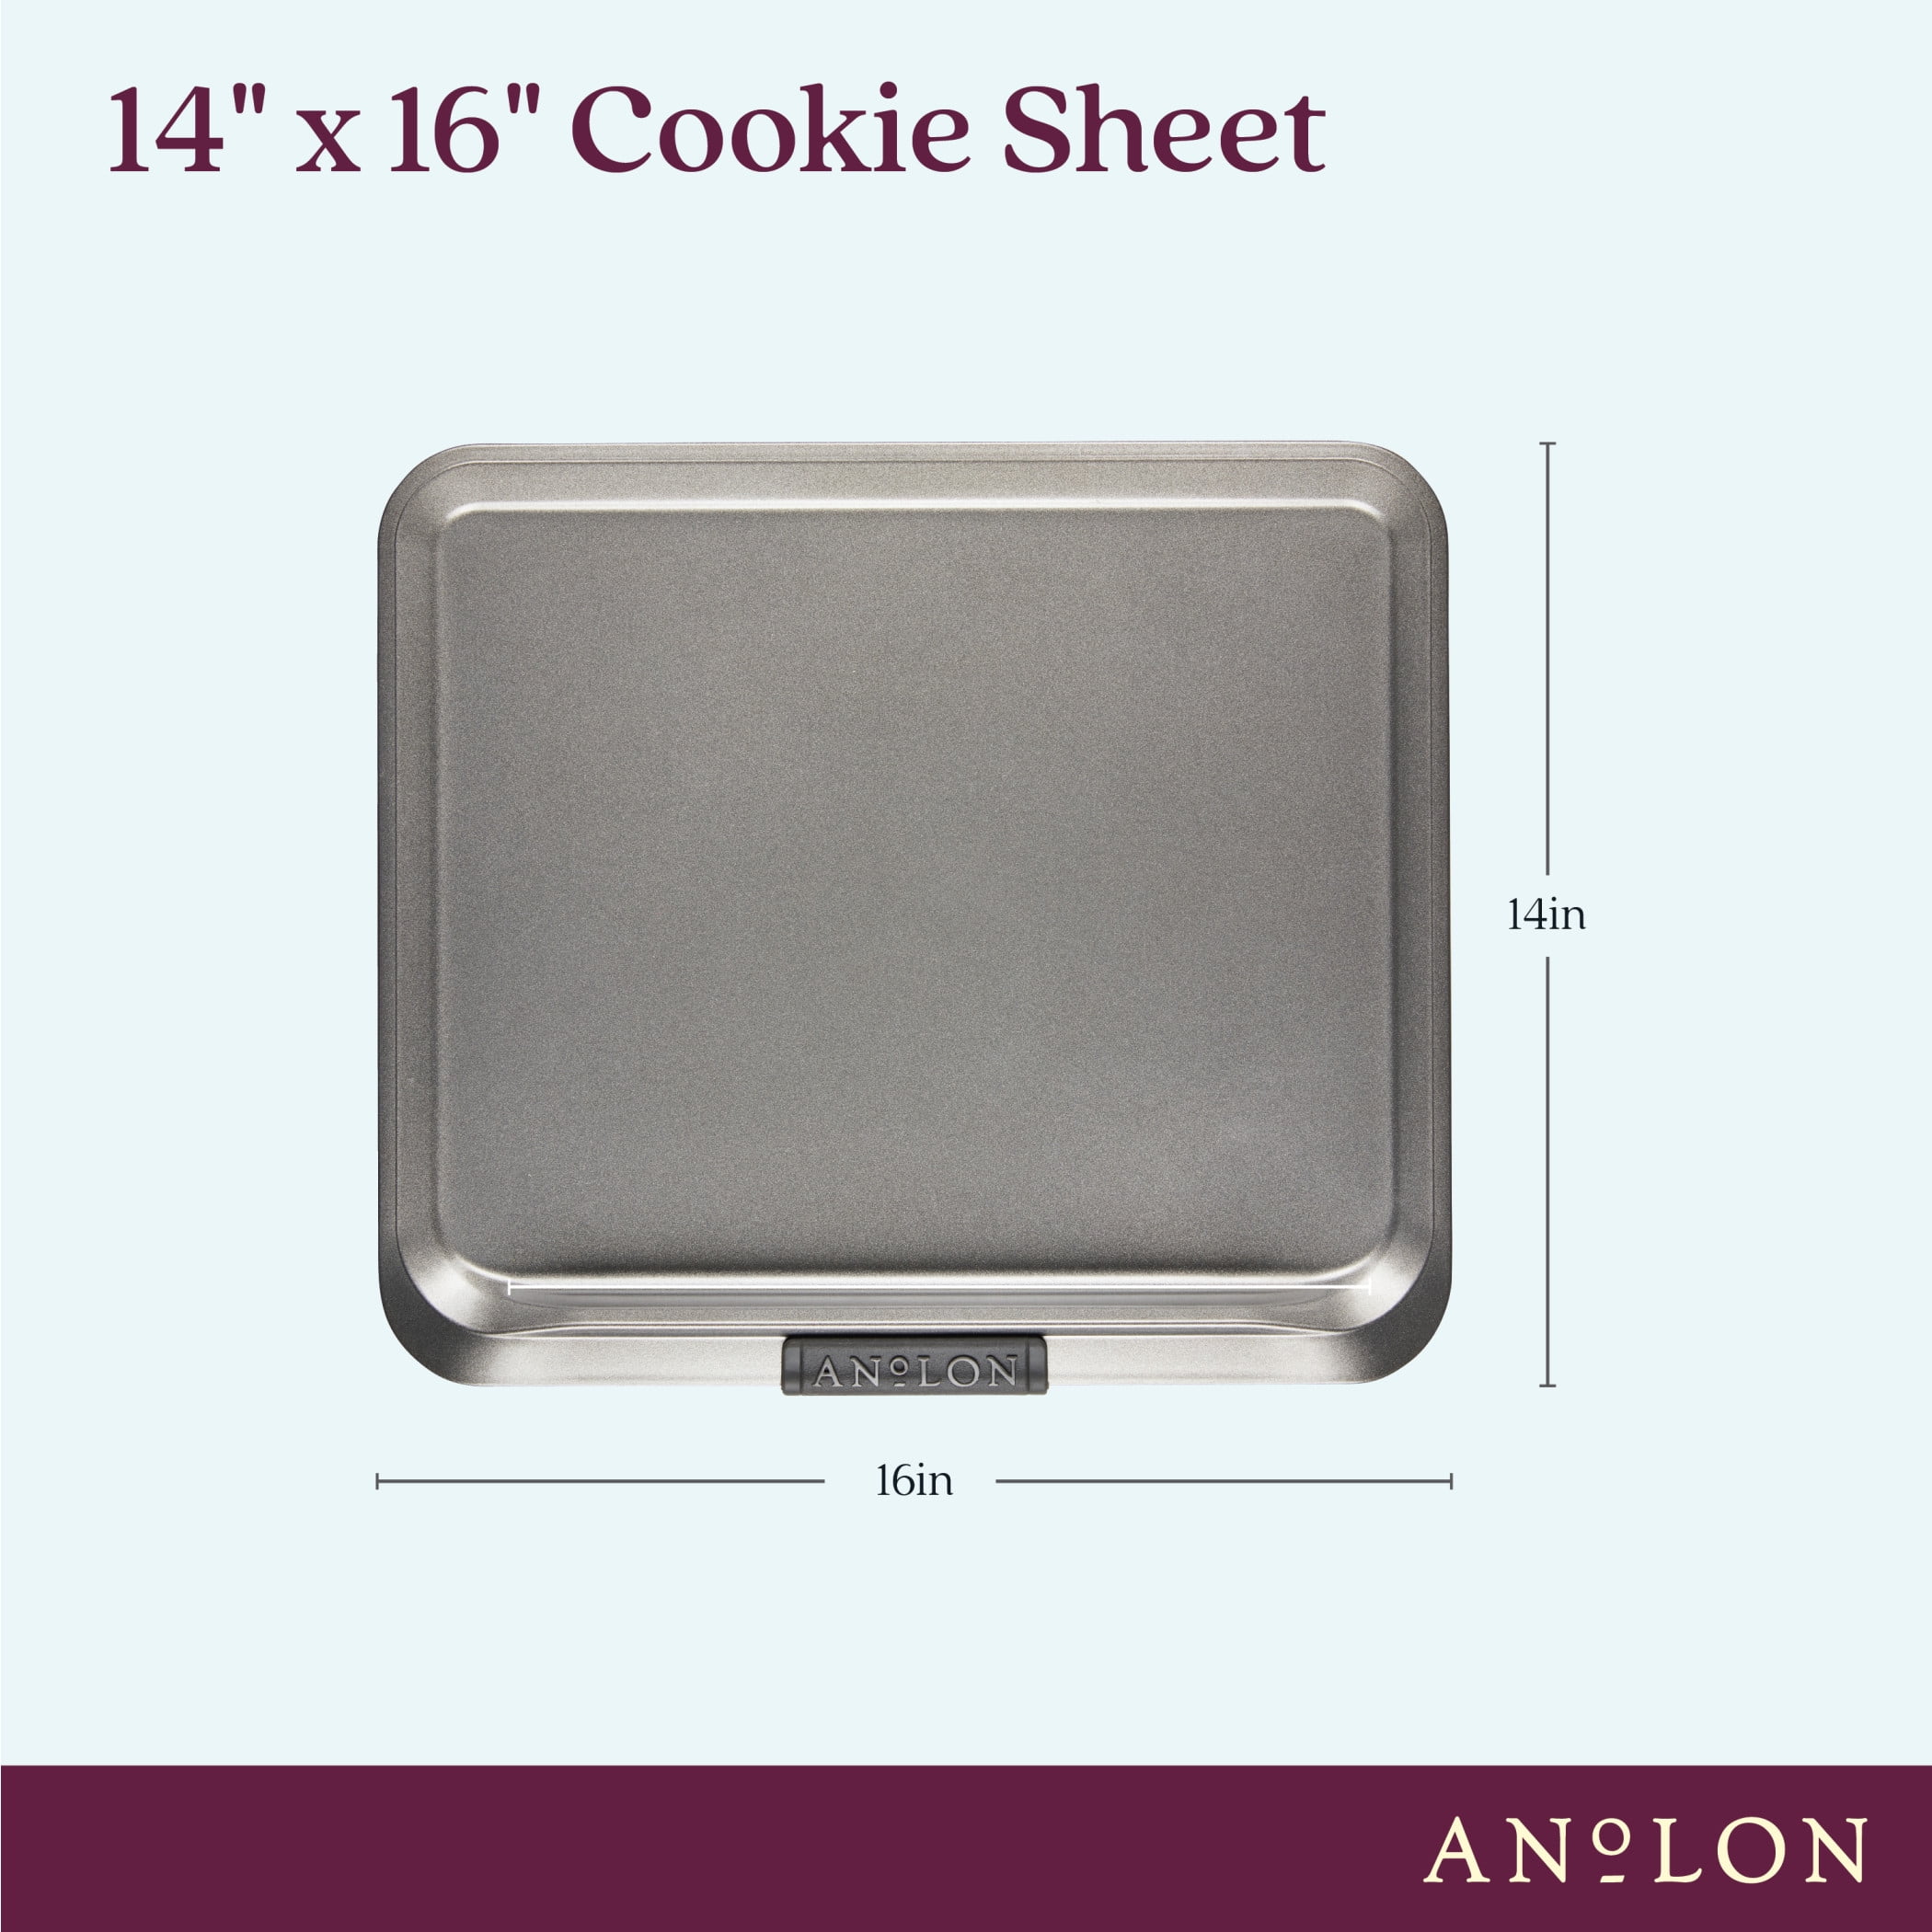 Norpro Stainless Steel Cookie Baking Sheet, 14X12 3861